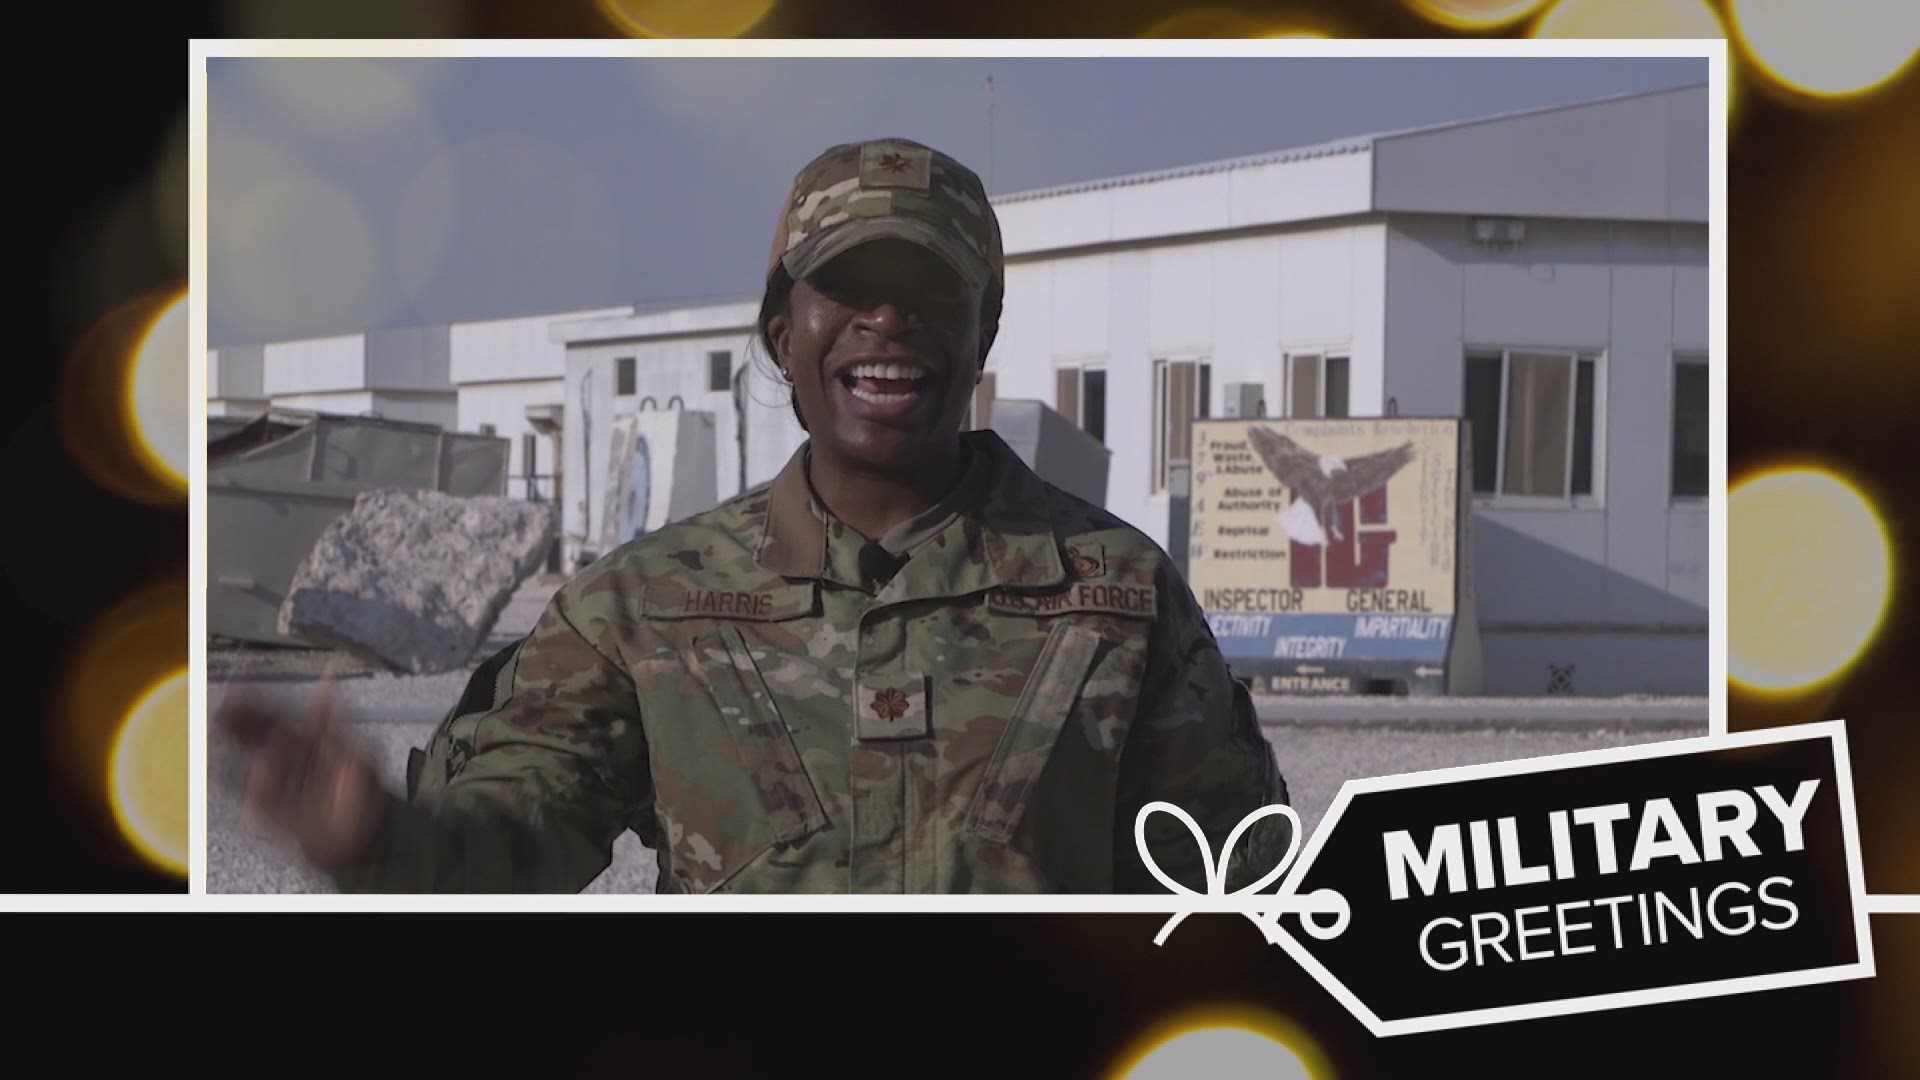 Military Greetings: Major Christina Harris